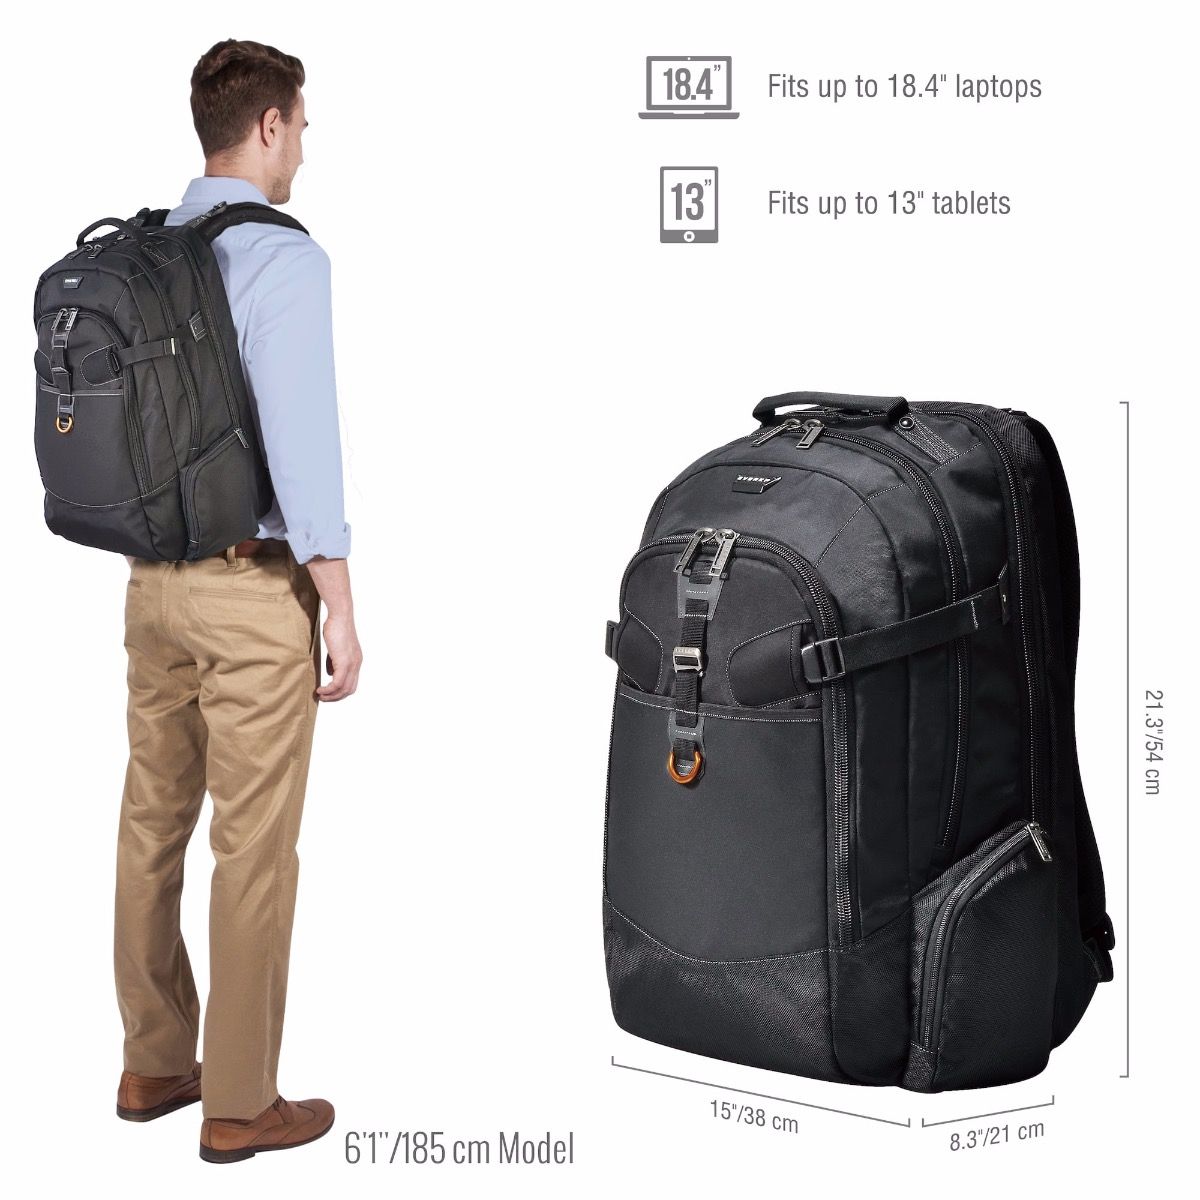 Everki Titan EKP120 Carrying Case Backpack for 18.4 Laptop - Black